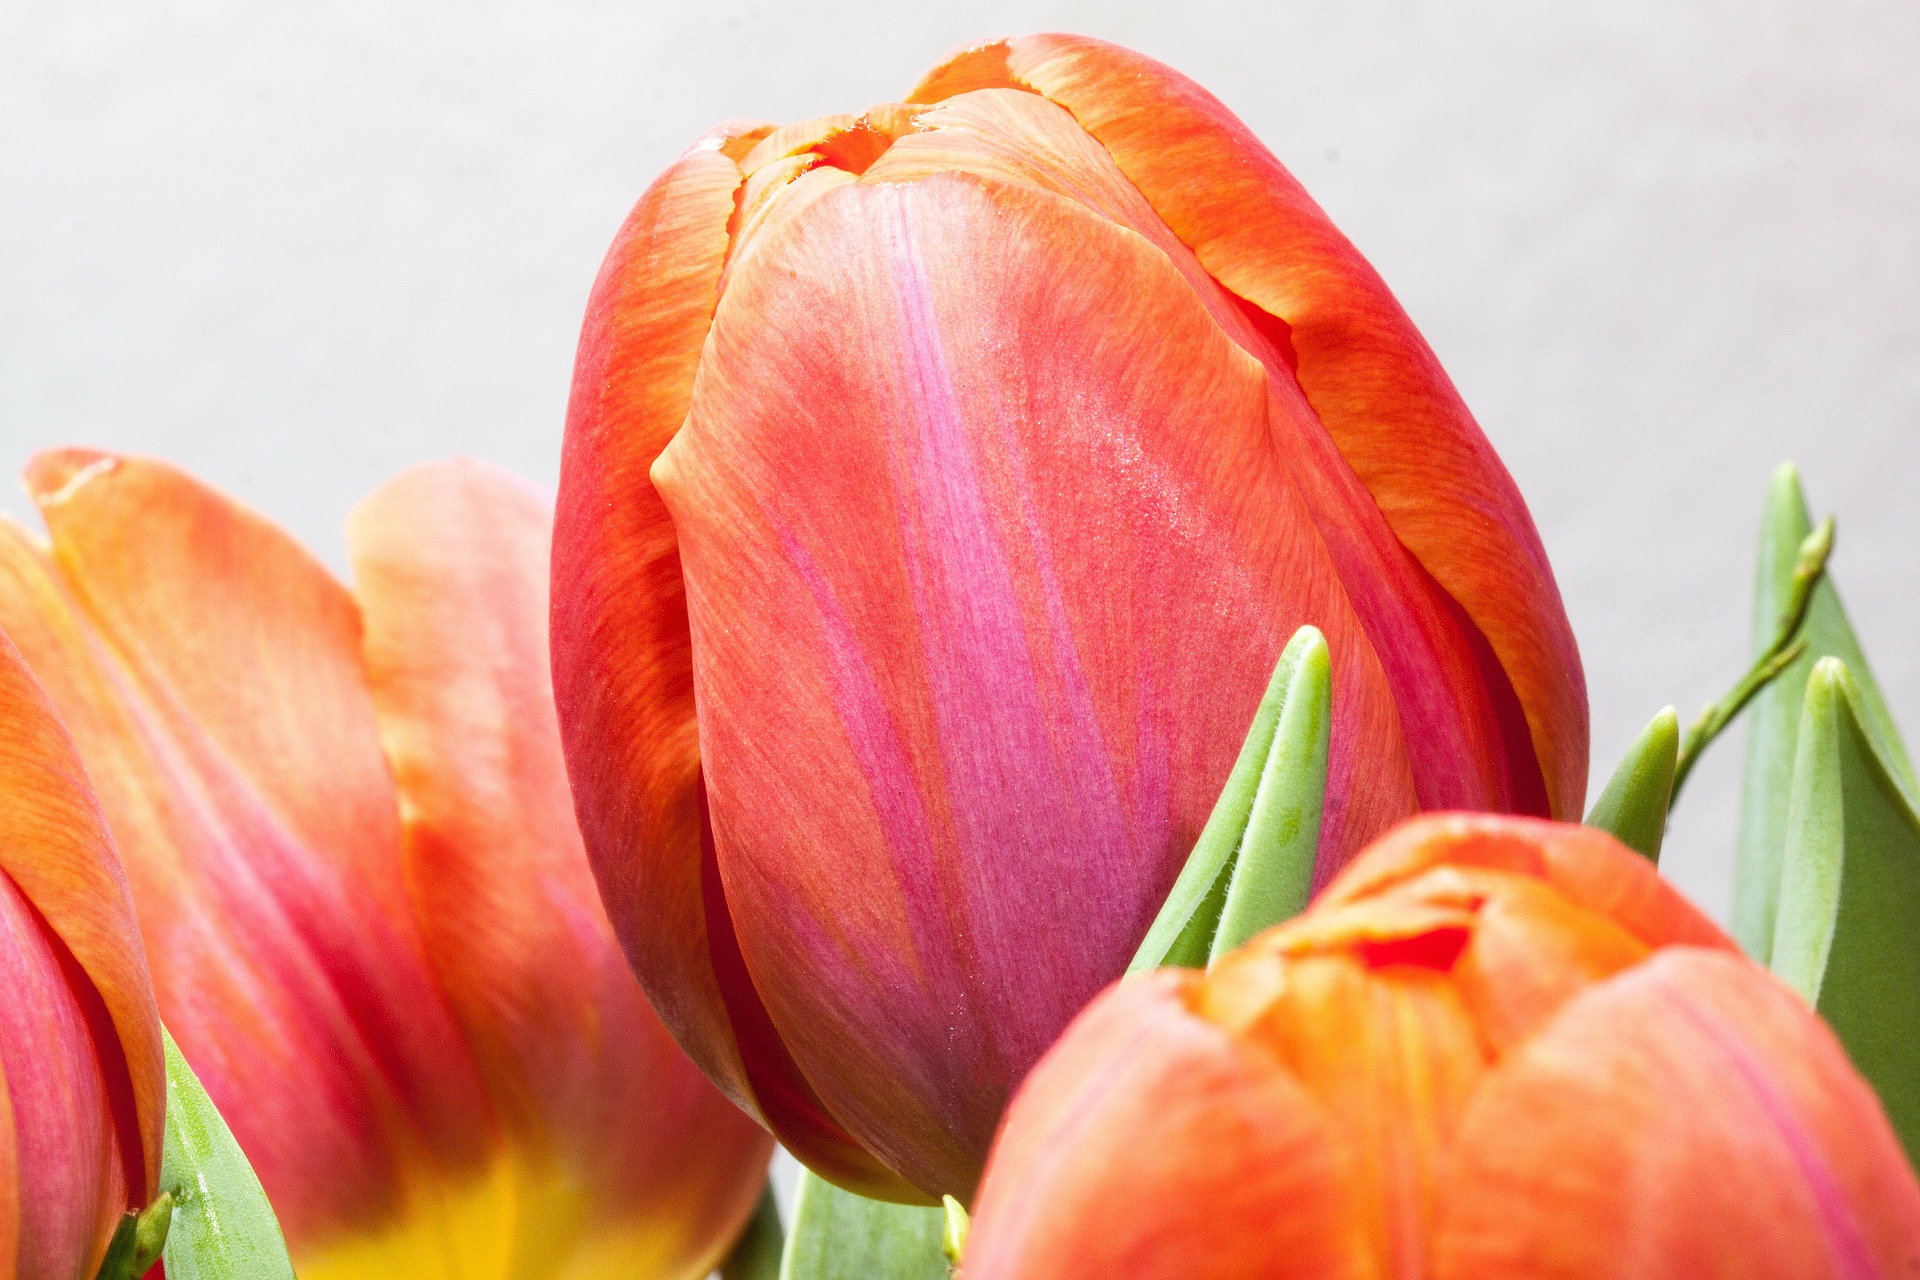 Tulip closeup photo